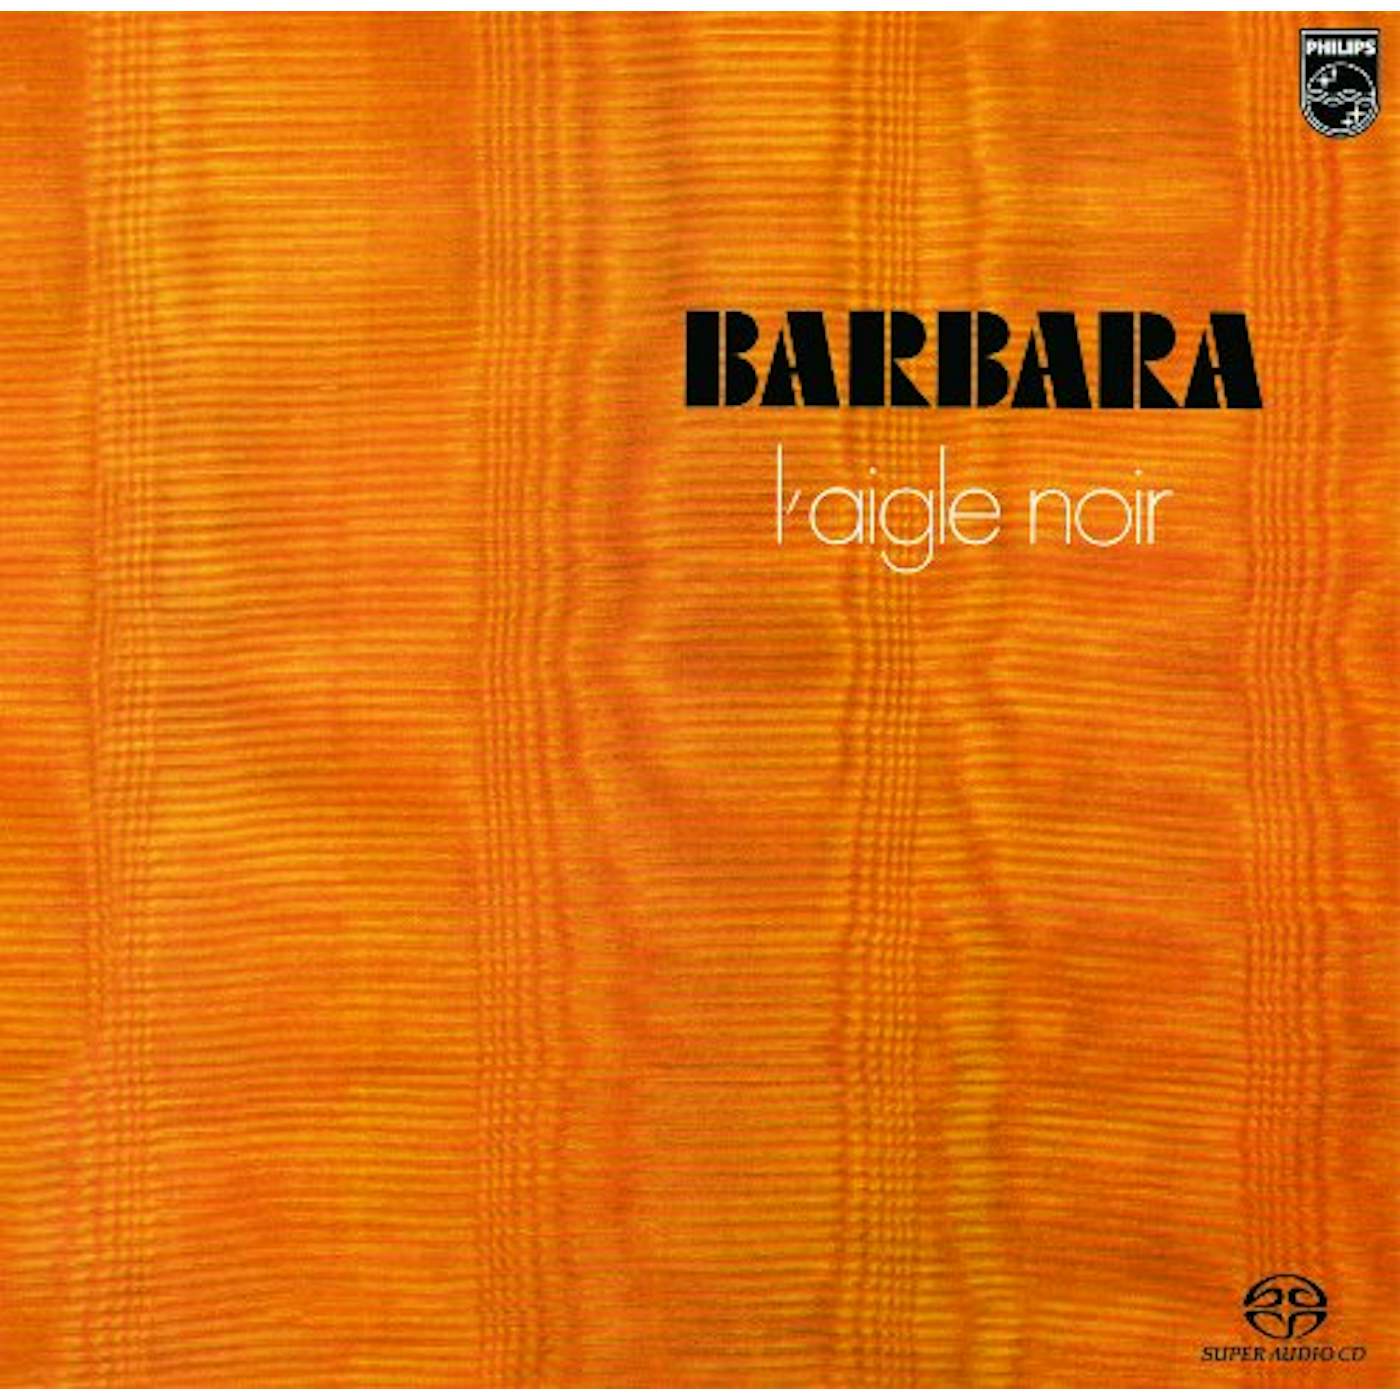 Barbara L'Aigle Noir Vinyl Record